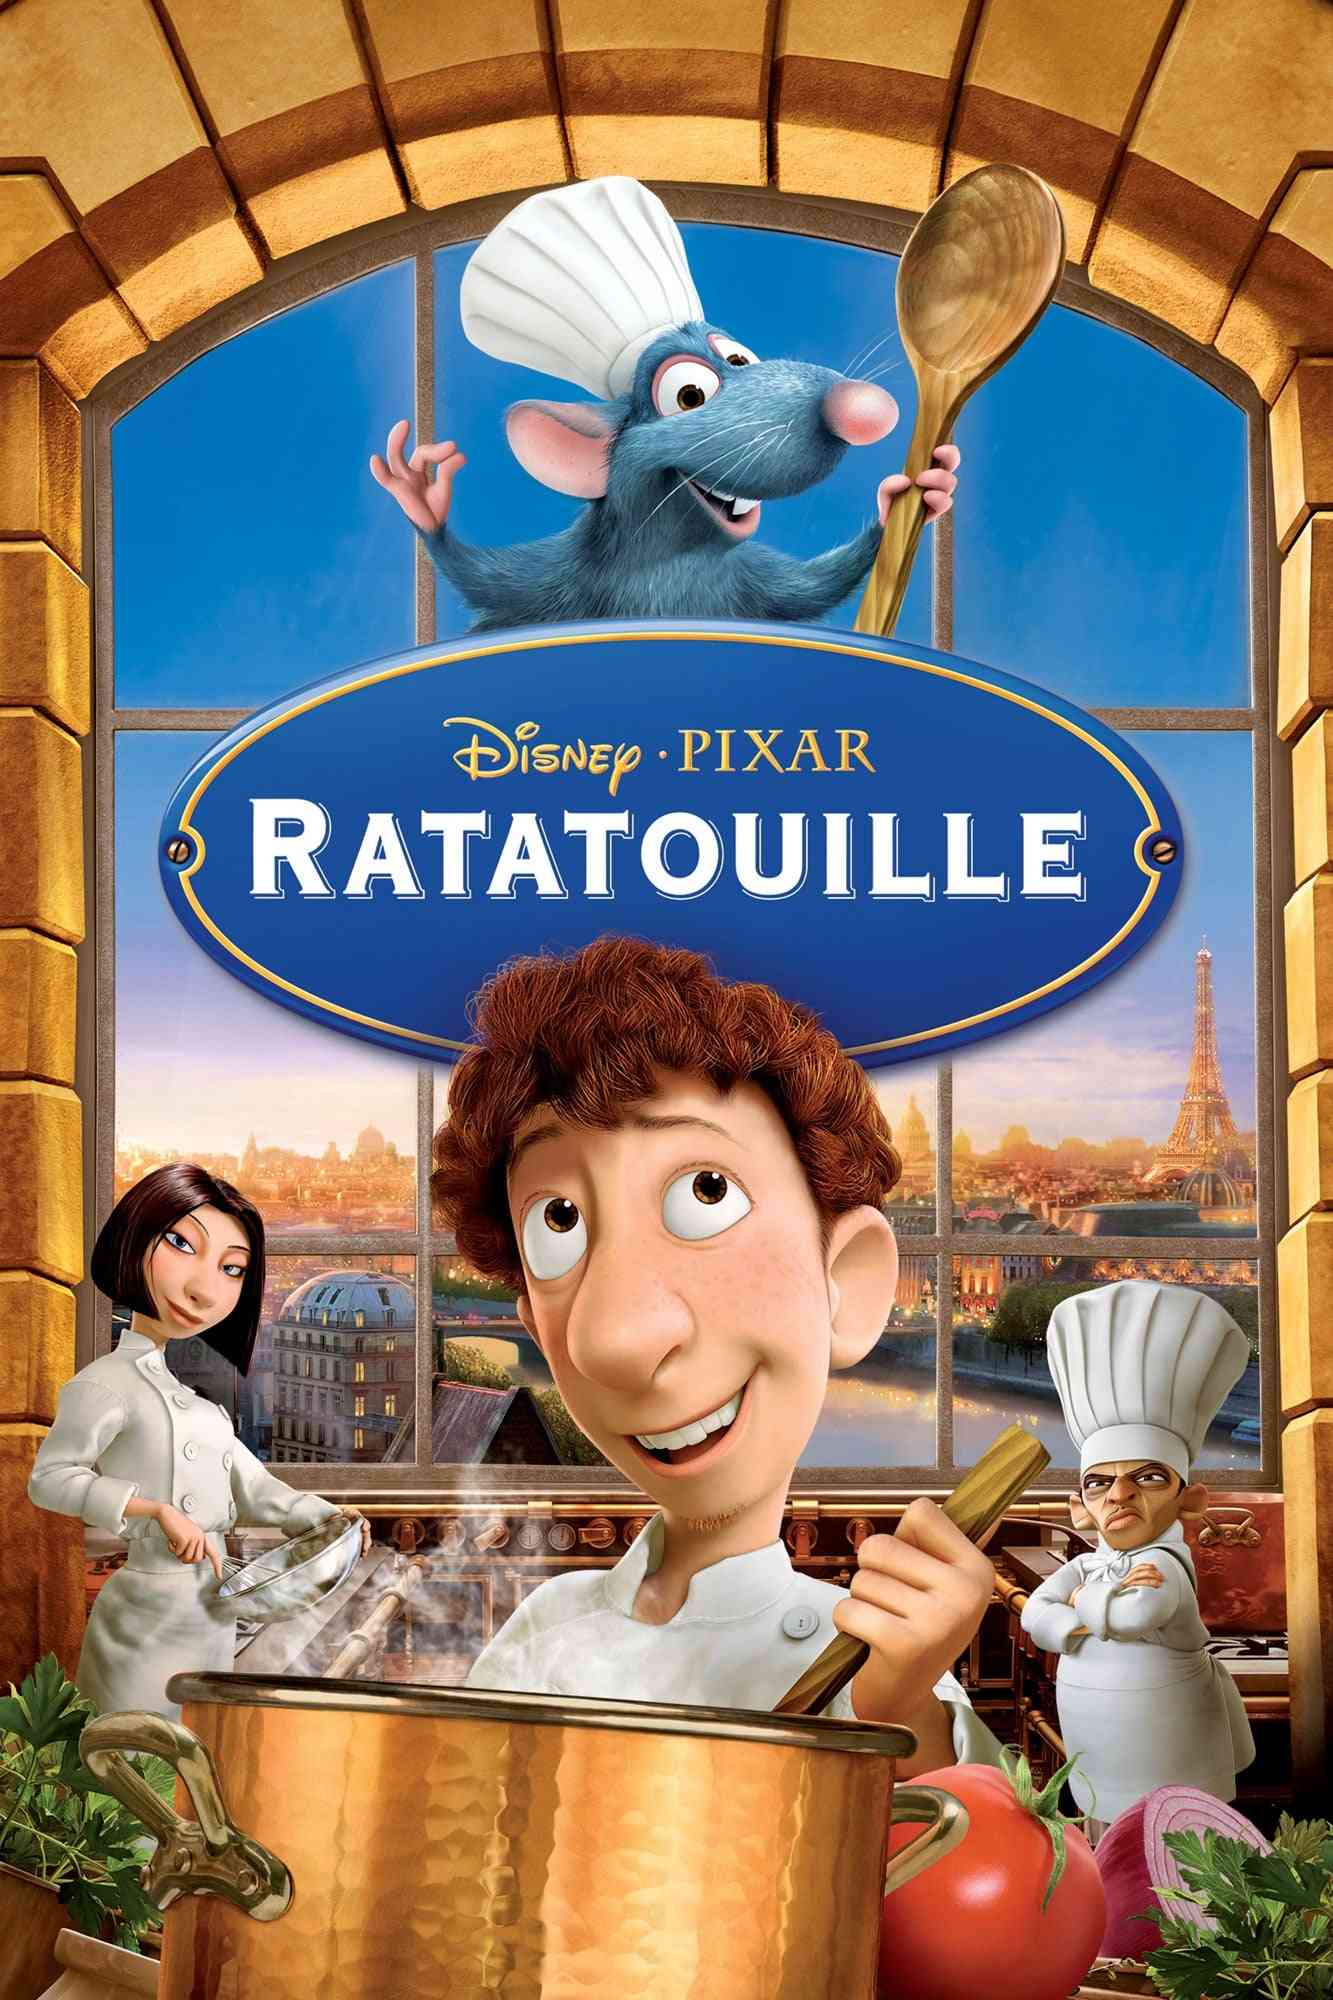 FULL MOVIE: Ratatouille (2007) [Animation]